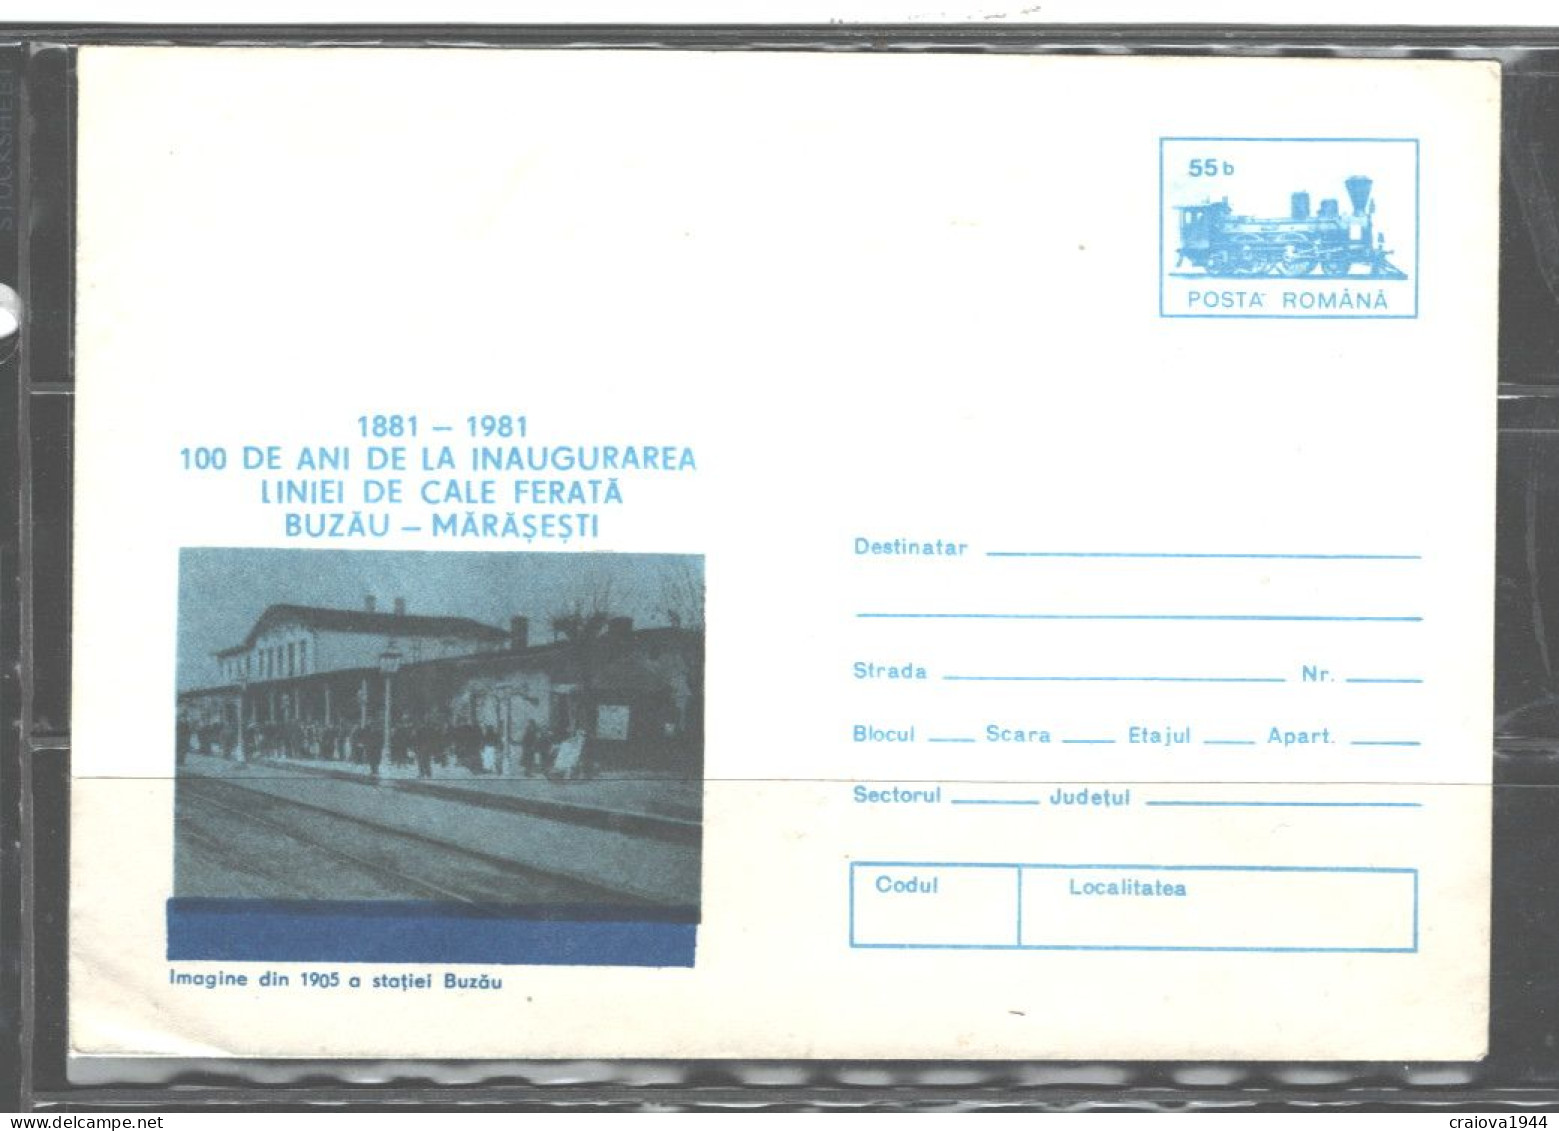 ROMANIA, 1881-1981 100th ANNIV. RAILWAY "BUZAU-MARASESTI PREPAID COVER - Briefe U. Dokumente